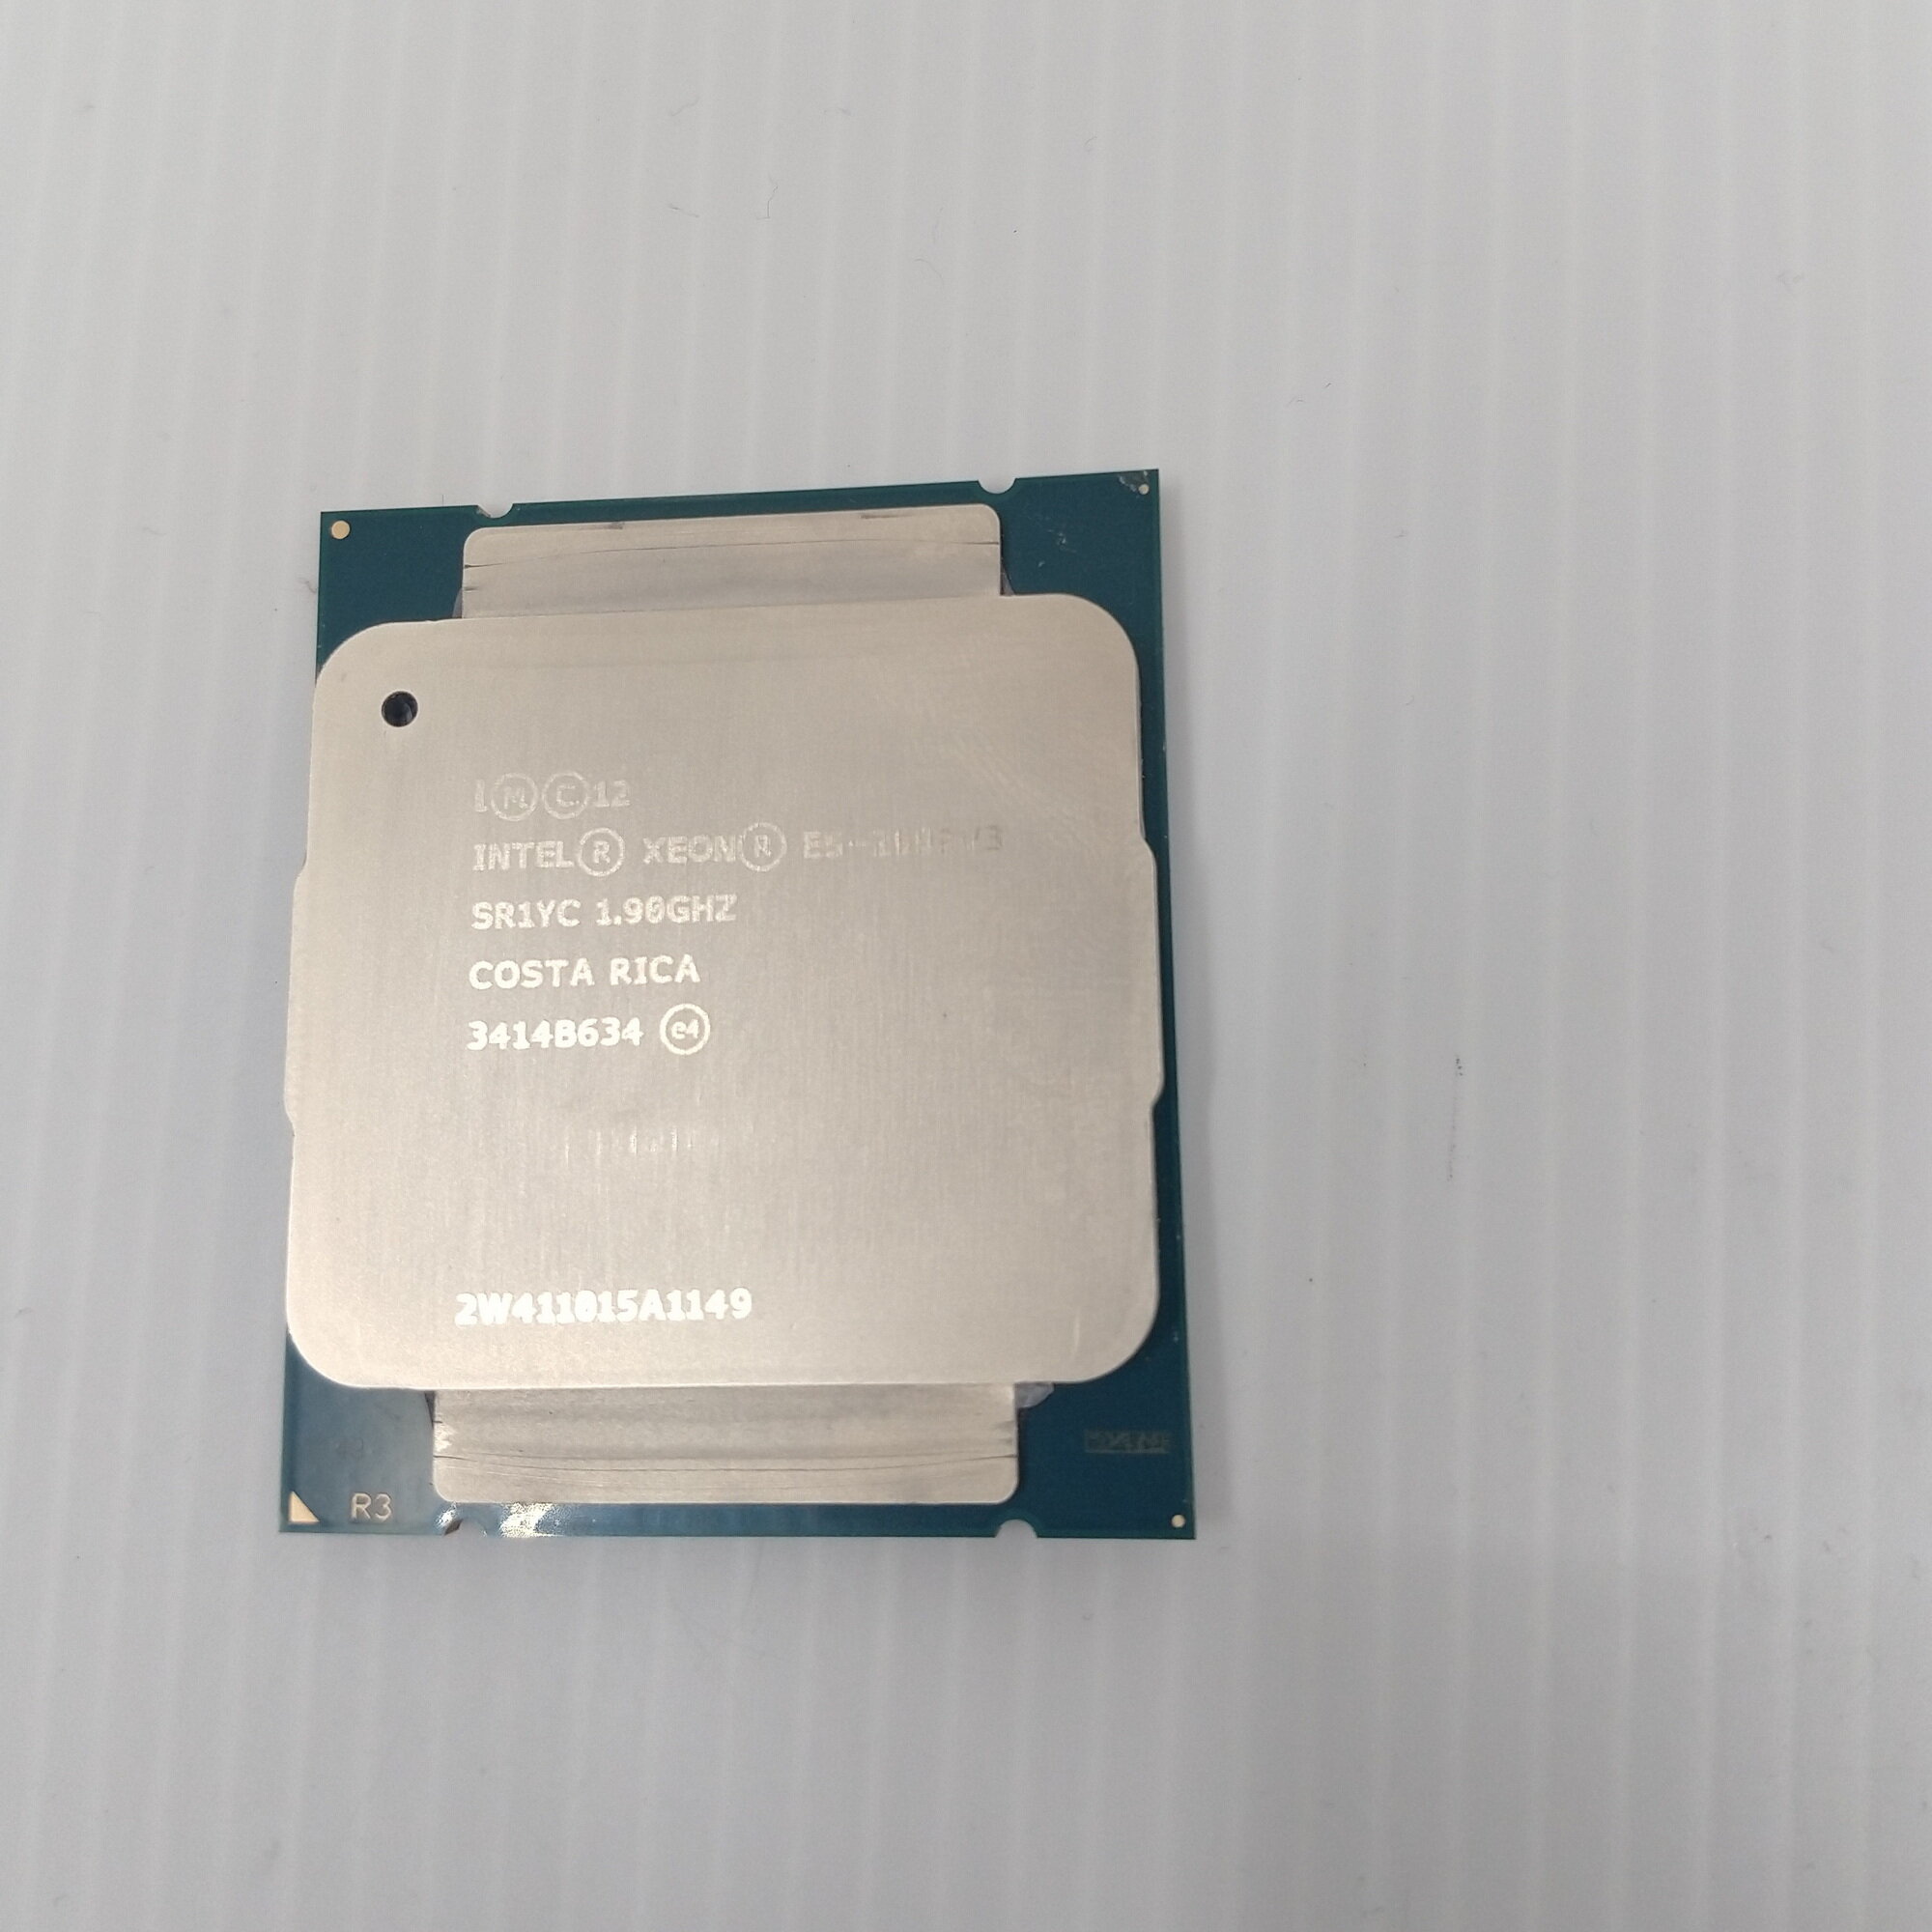 Процессор Intel Xeon E5-2609 V3, 6 cores, 1.90 GHz, SR1YC